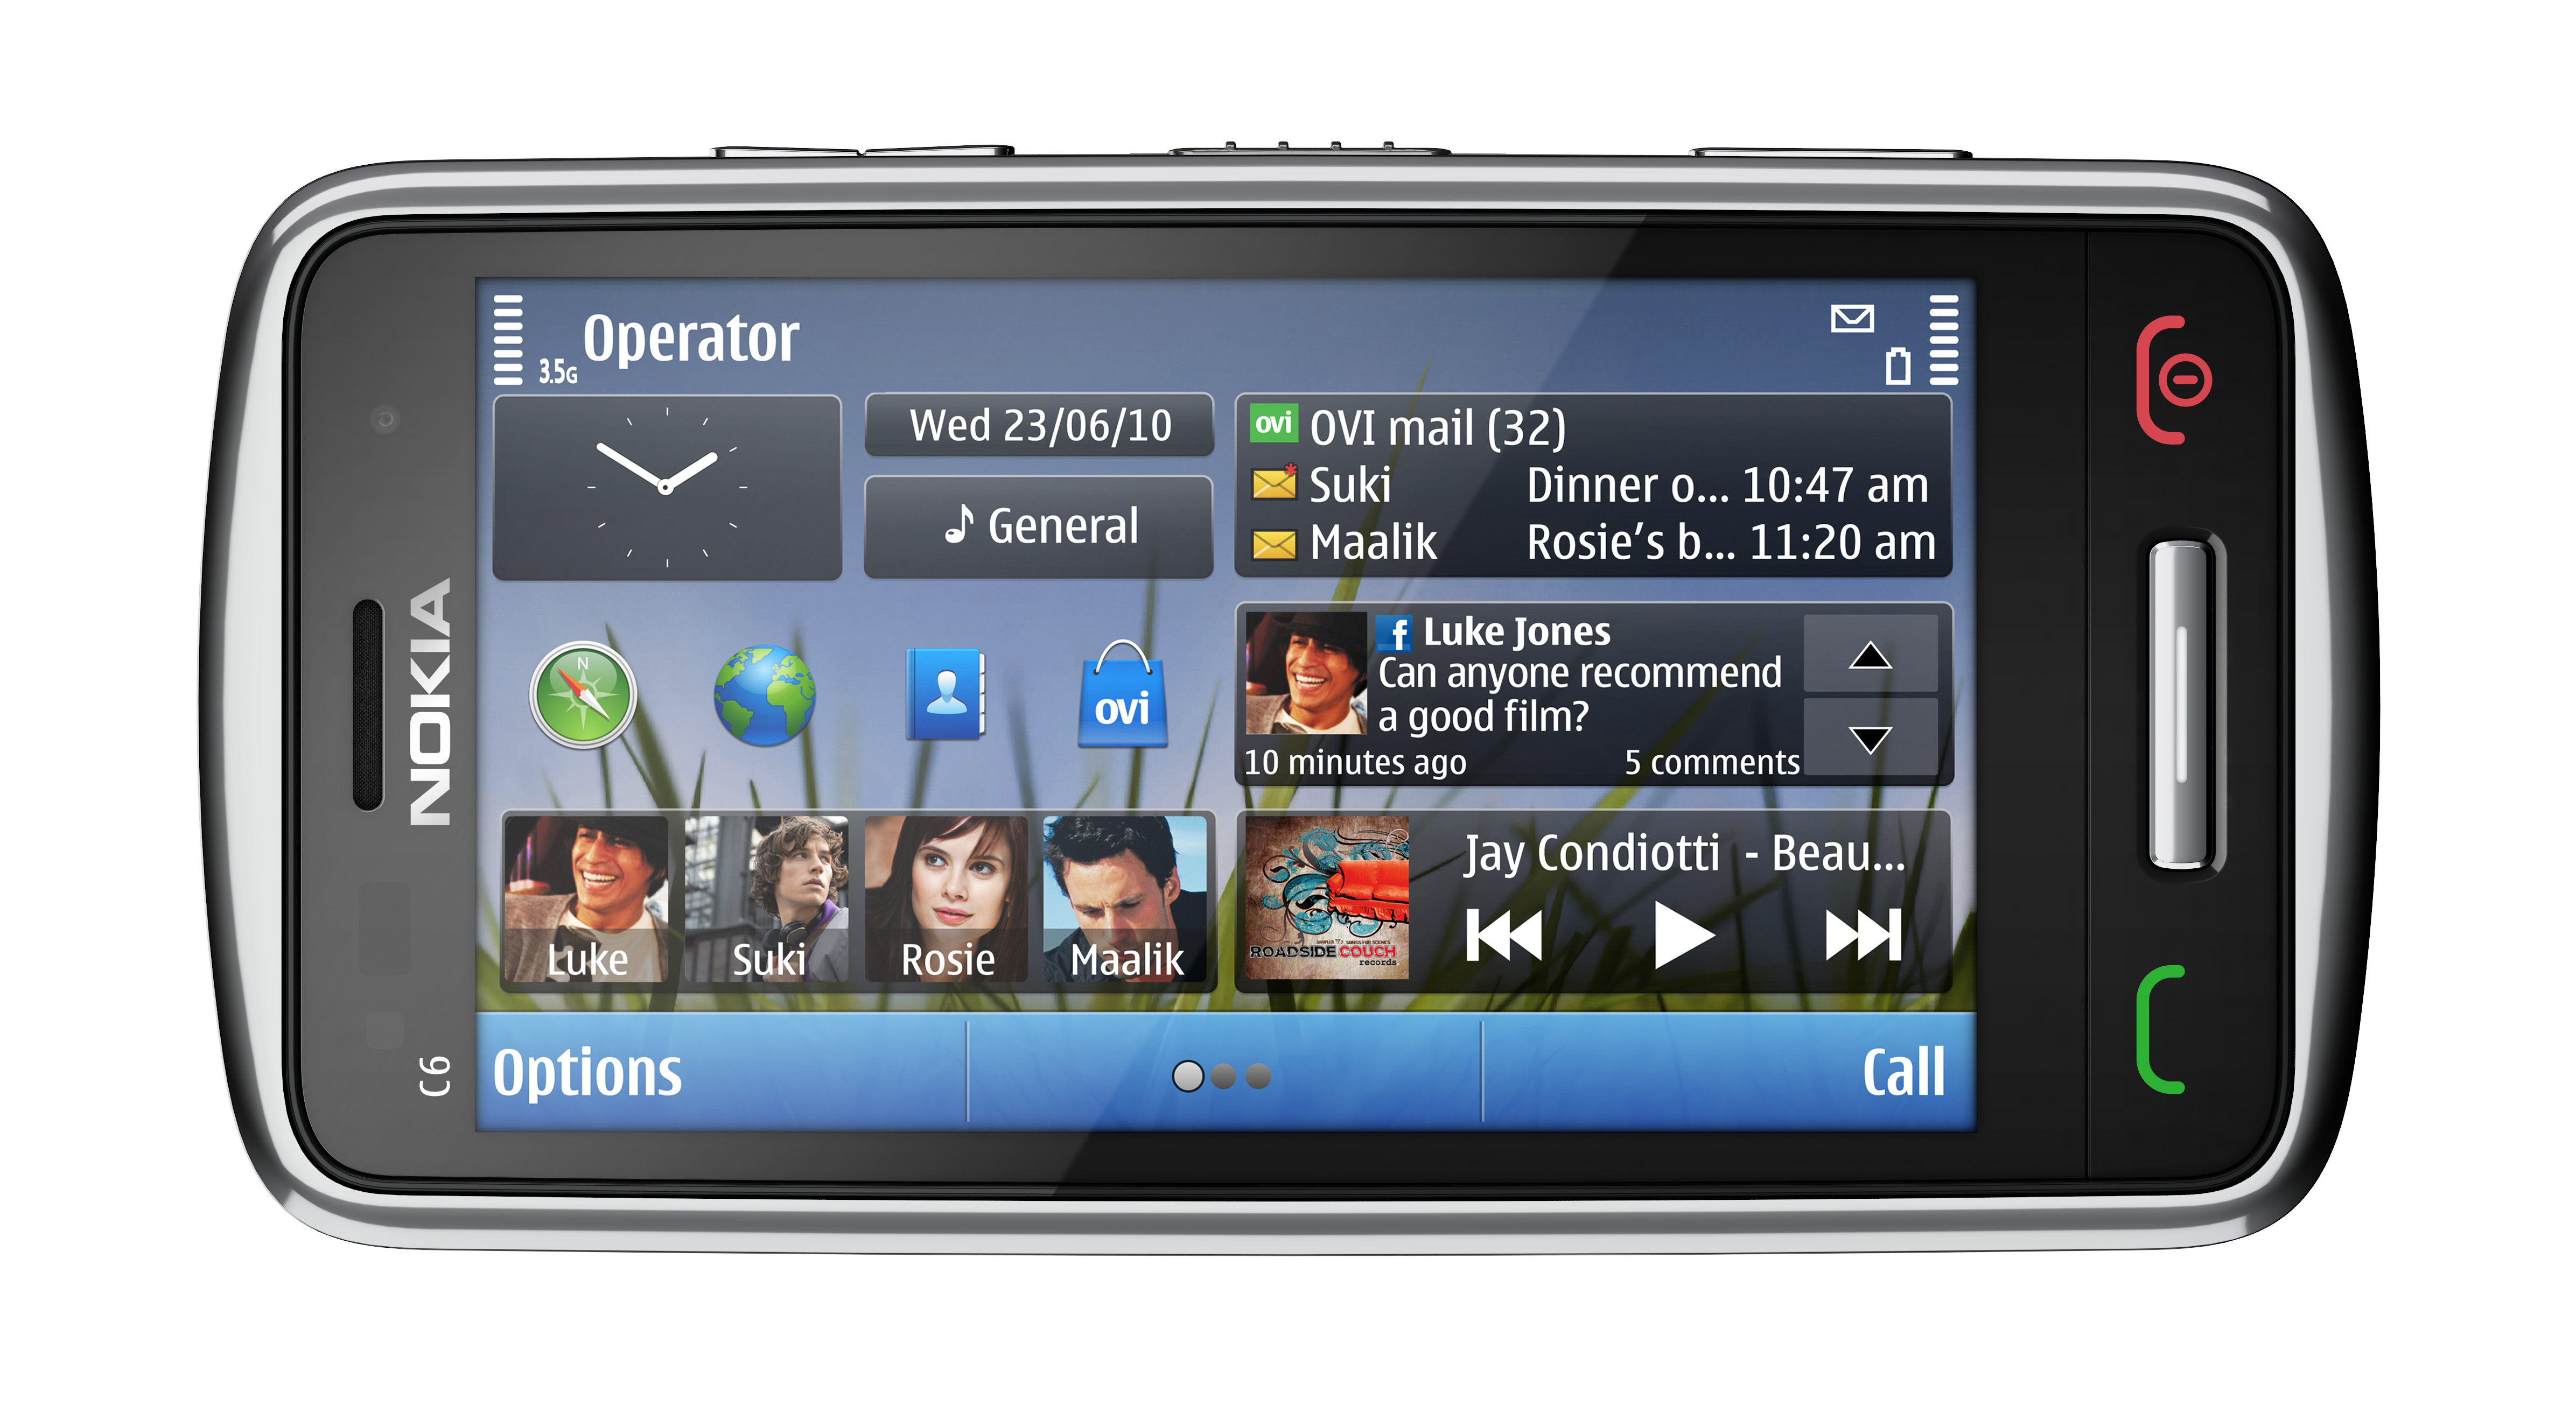 Nokia 6680 Unlocking Software